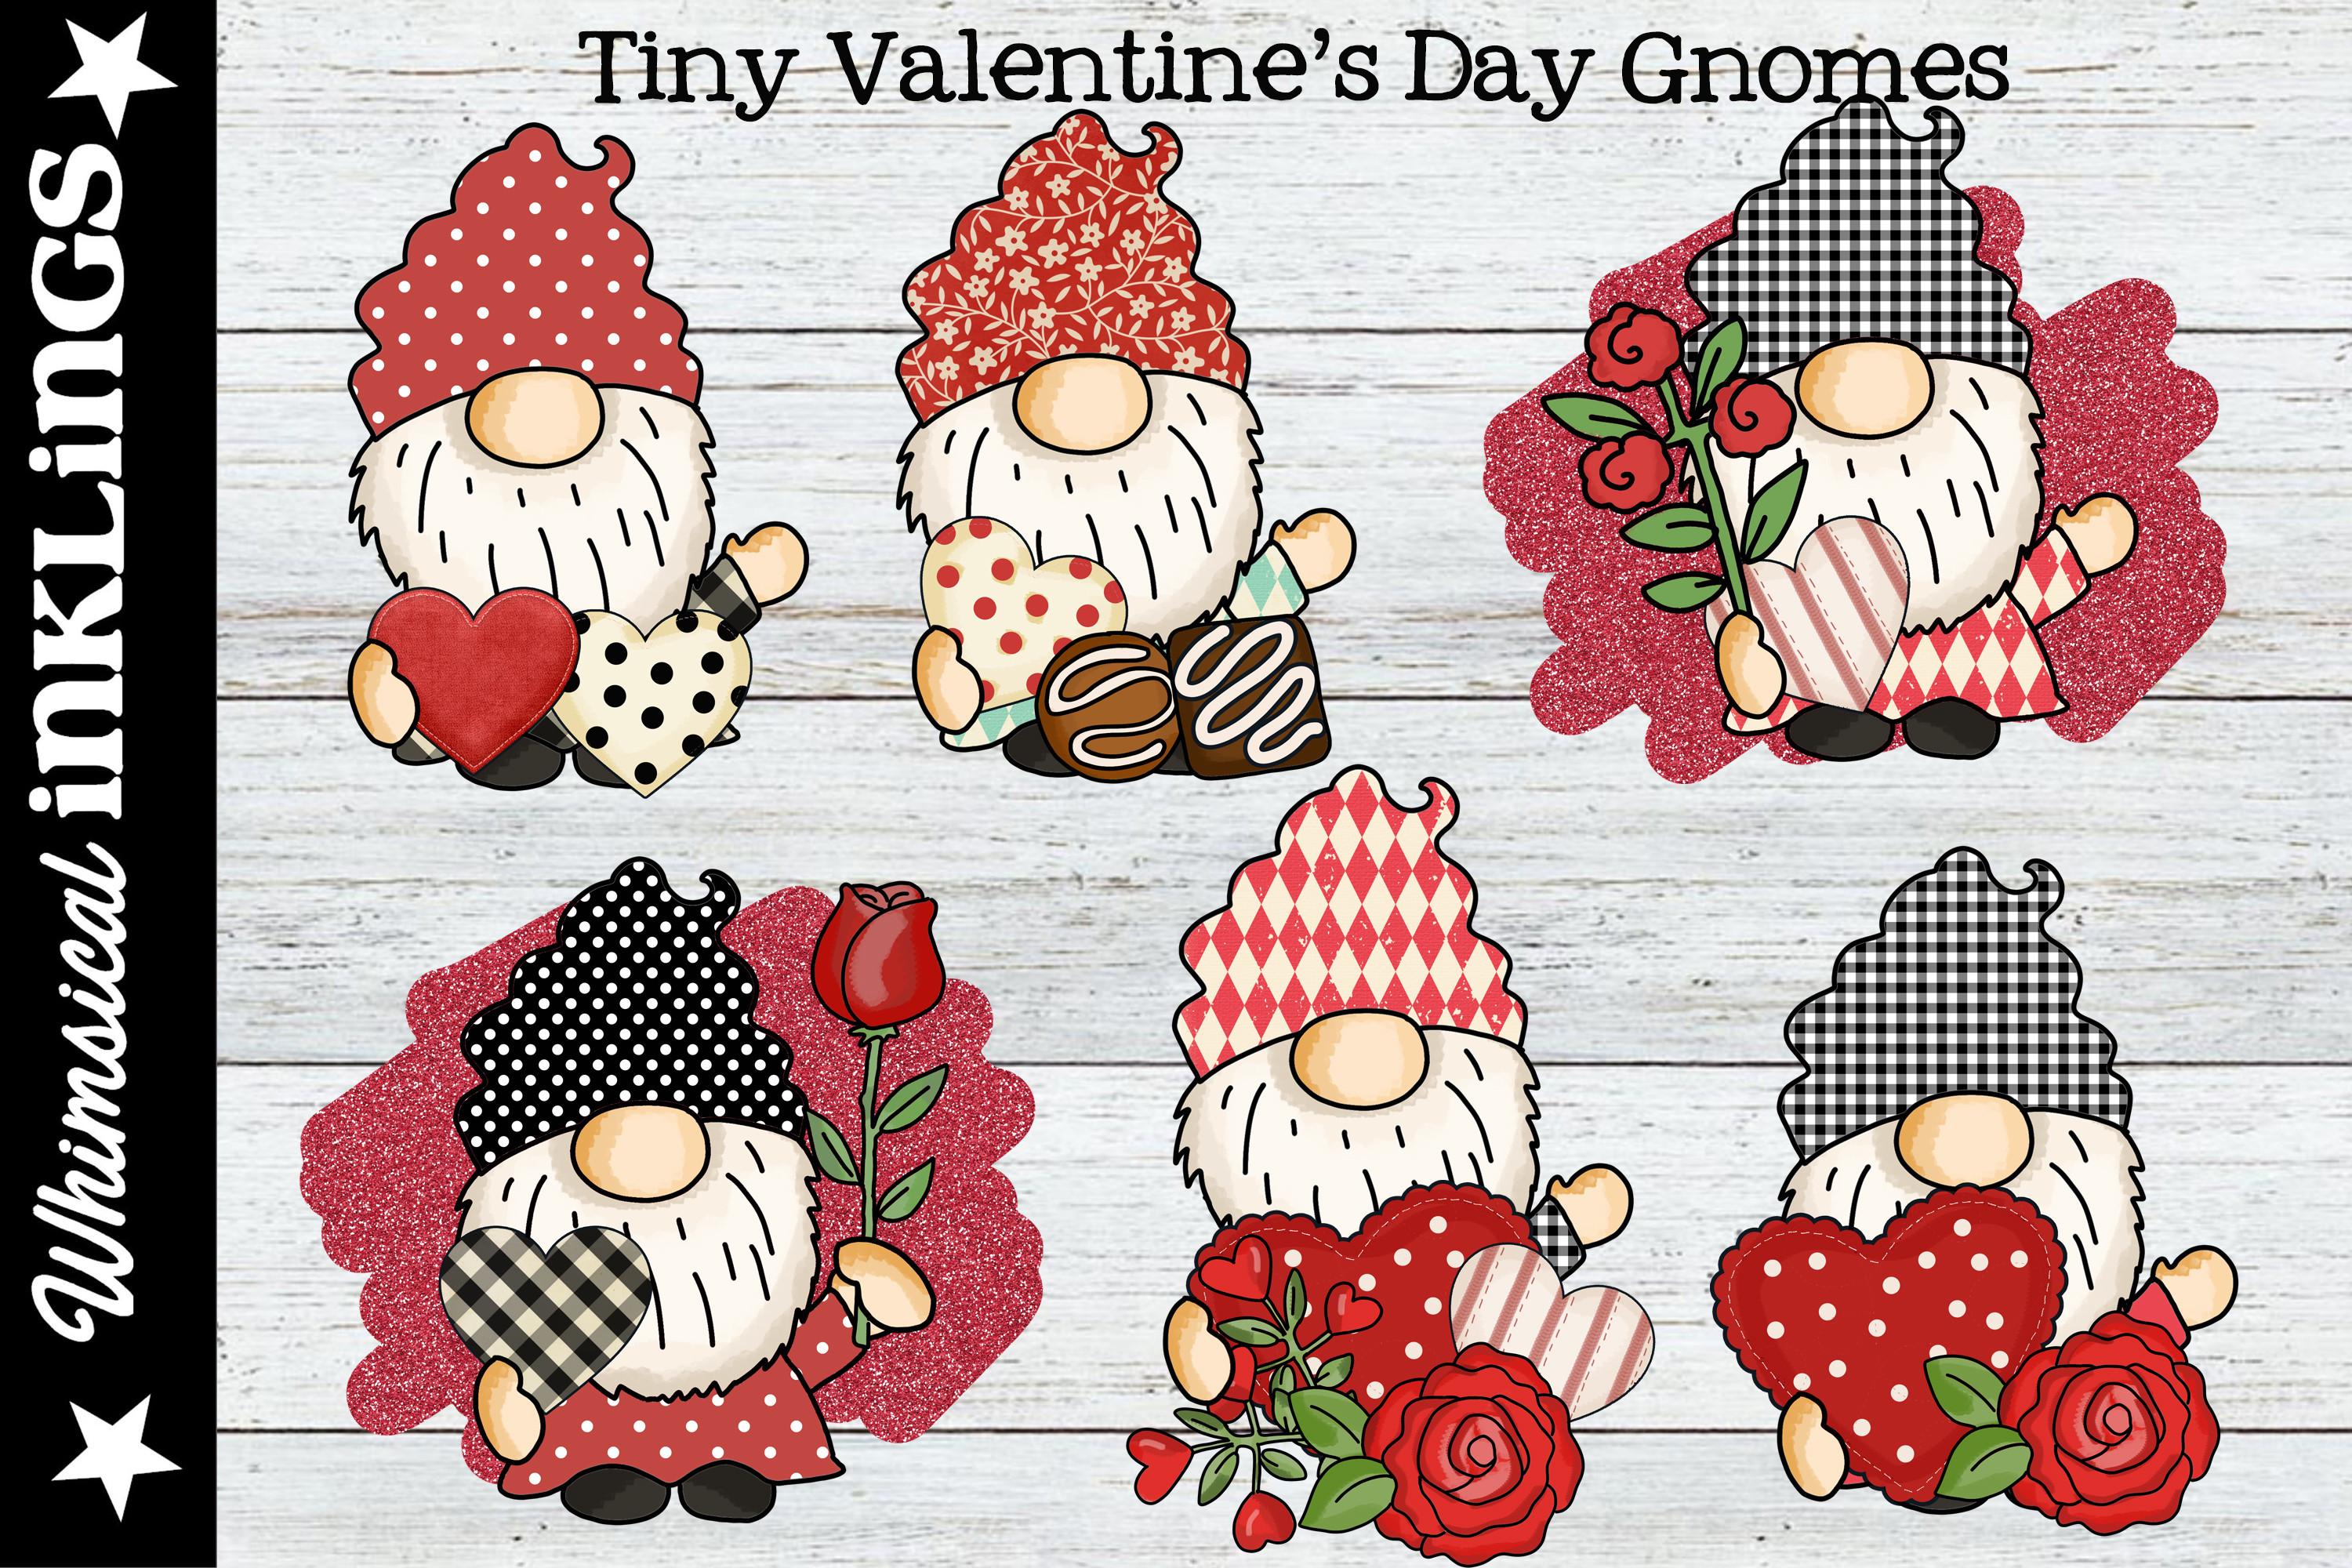 Tiny Valentine's Day Gnomes